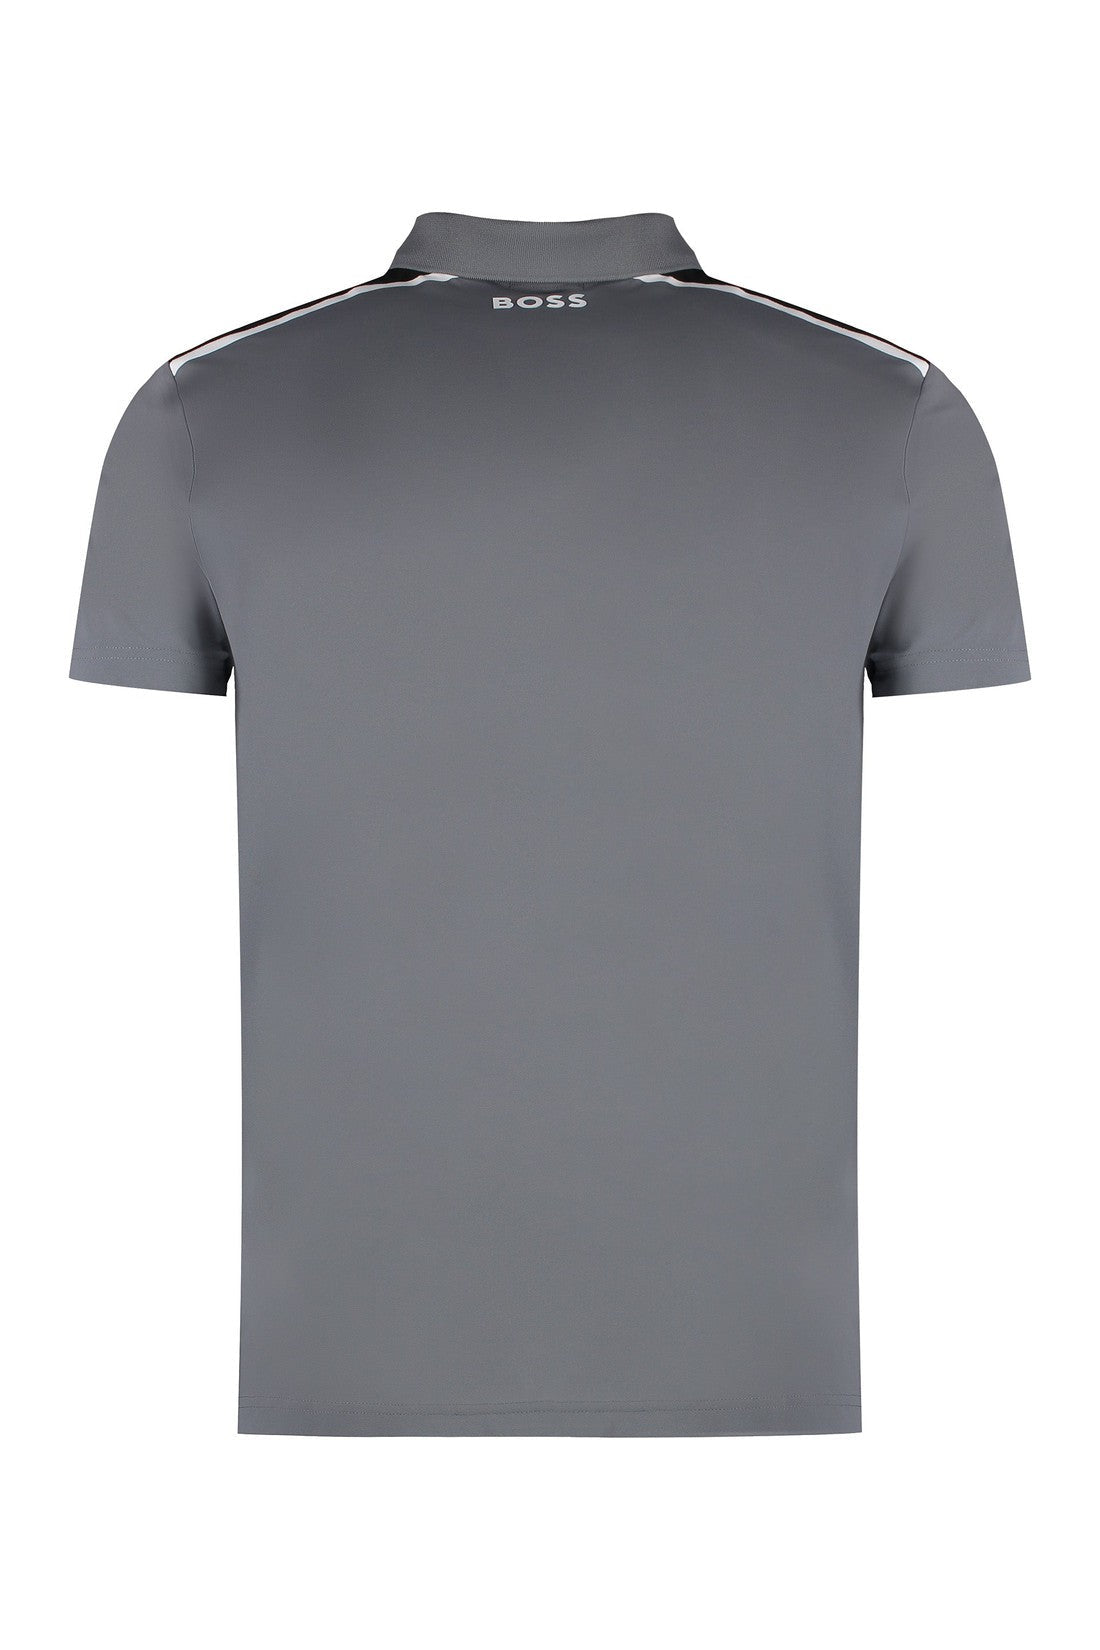 BOSS-OUTLET-SALE-Techno jersey polo shirt-ARCHIVIST